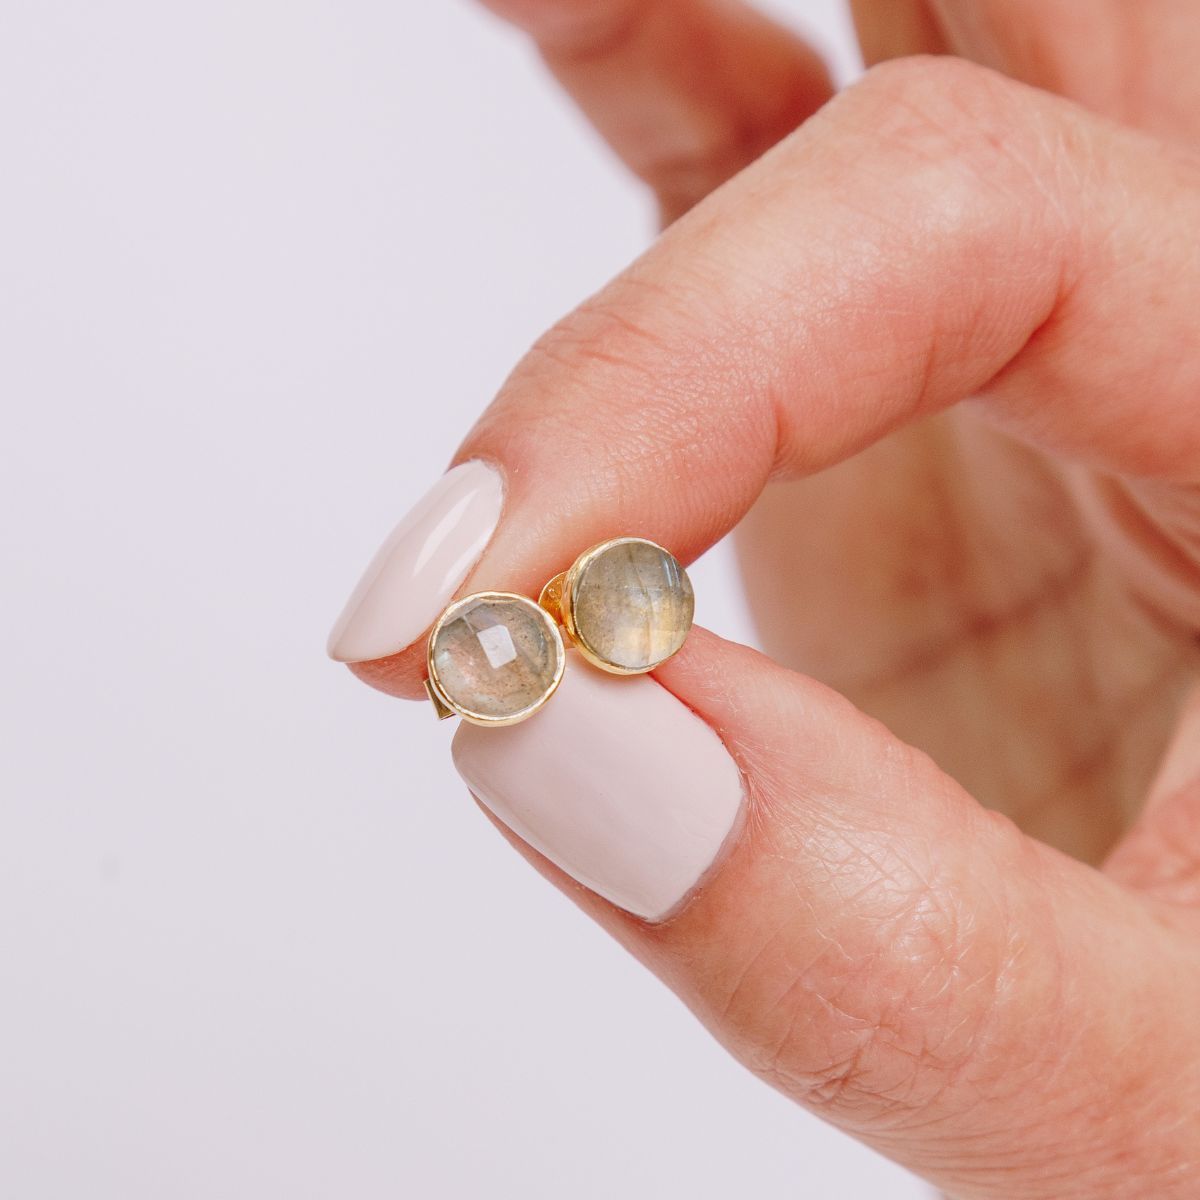 Pink Sapphire Round Gemstone Stud Earrings in Platinum (5.1 mm)